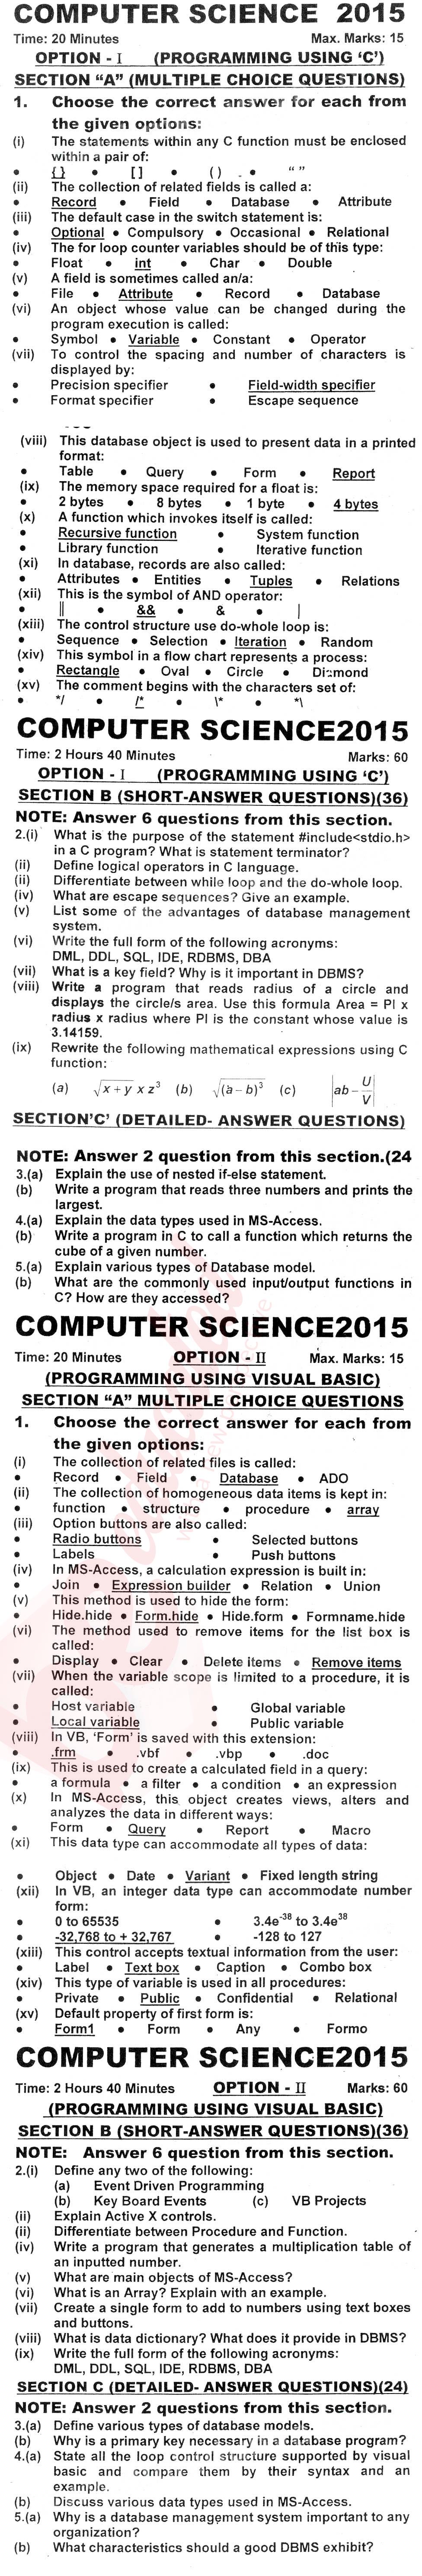 Computer Science ICS Part 2 Past Paper Group 1 KPBTE 2015